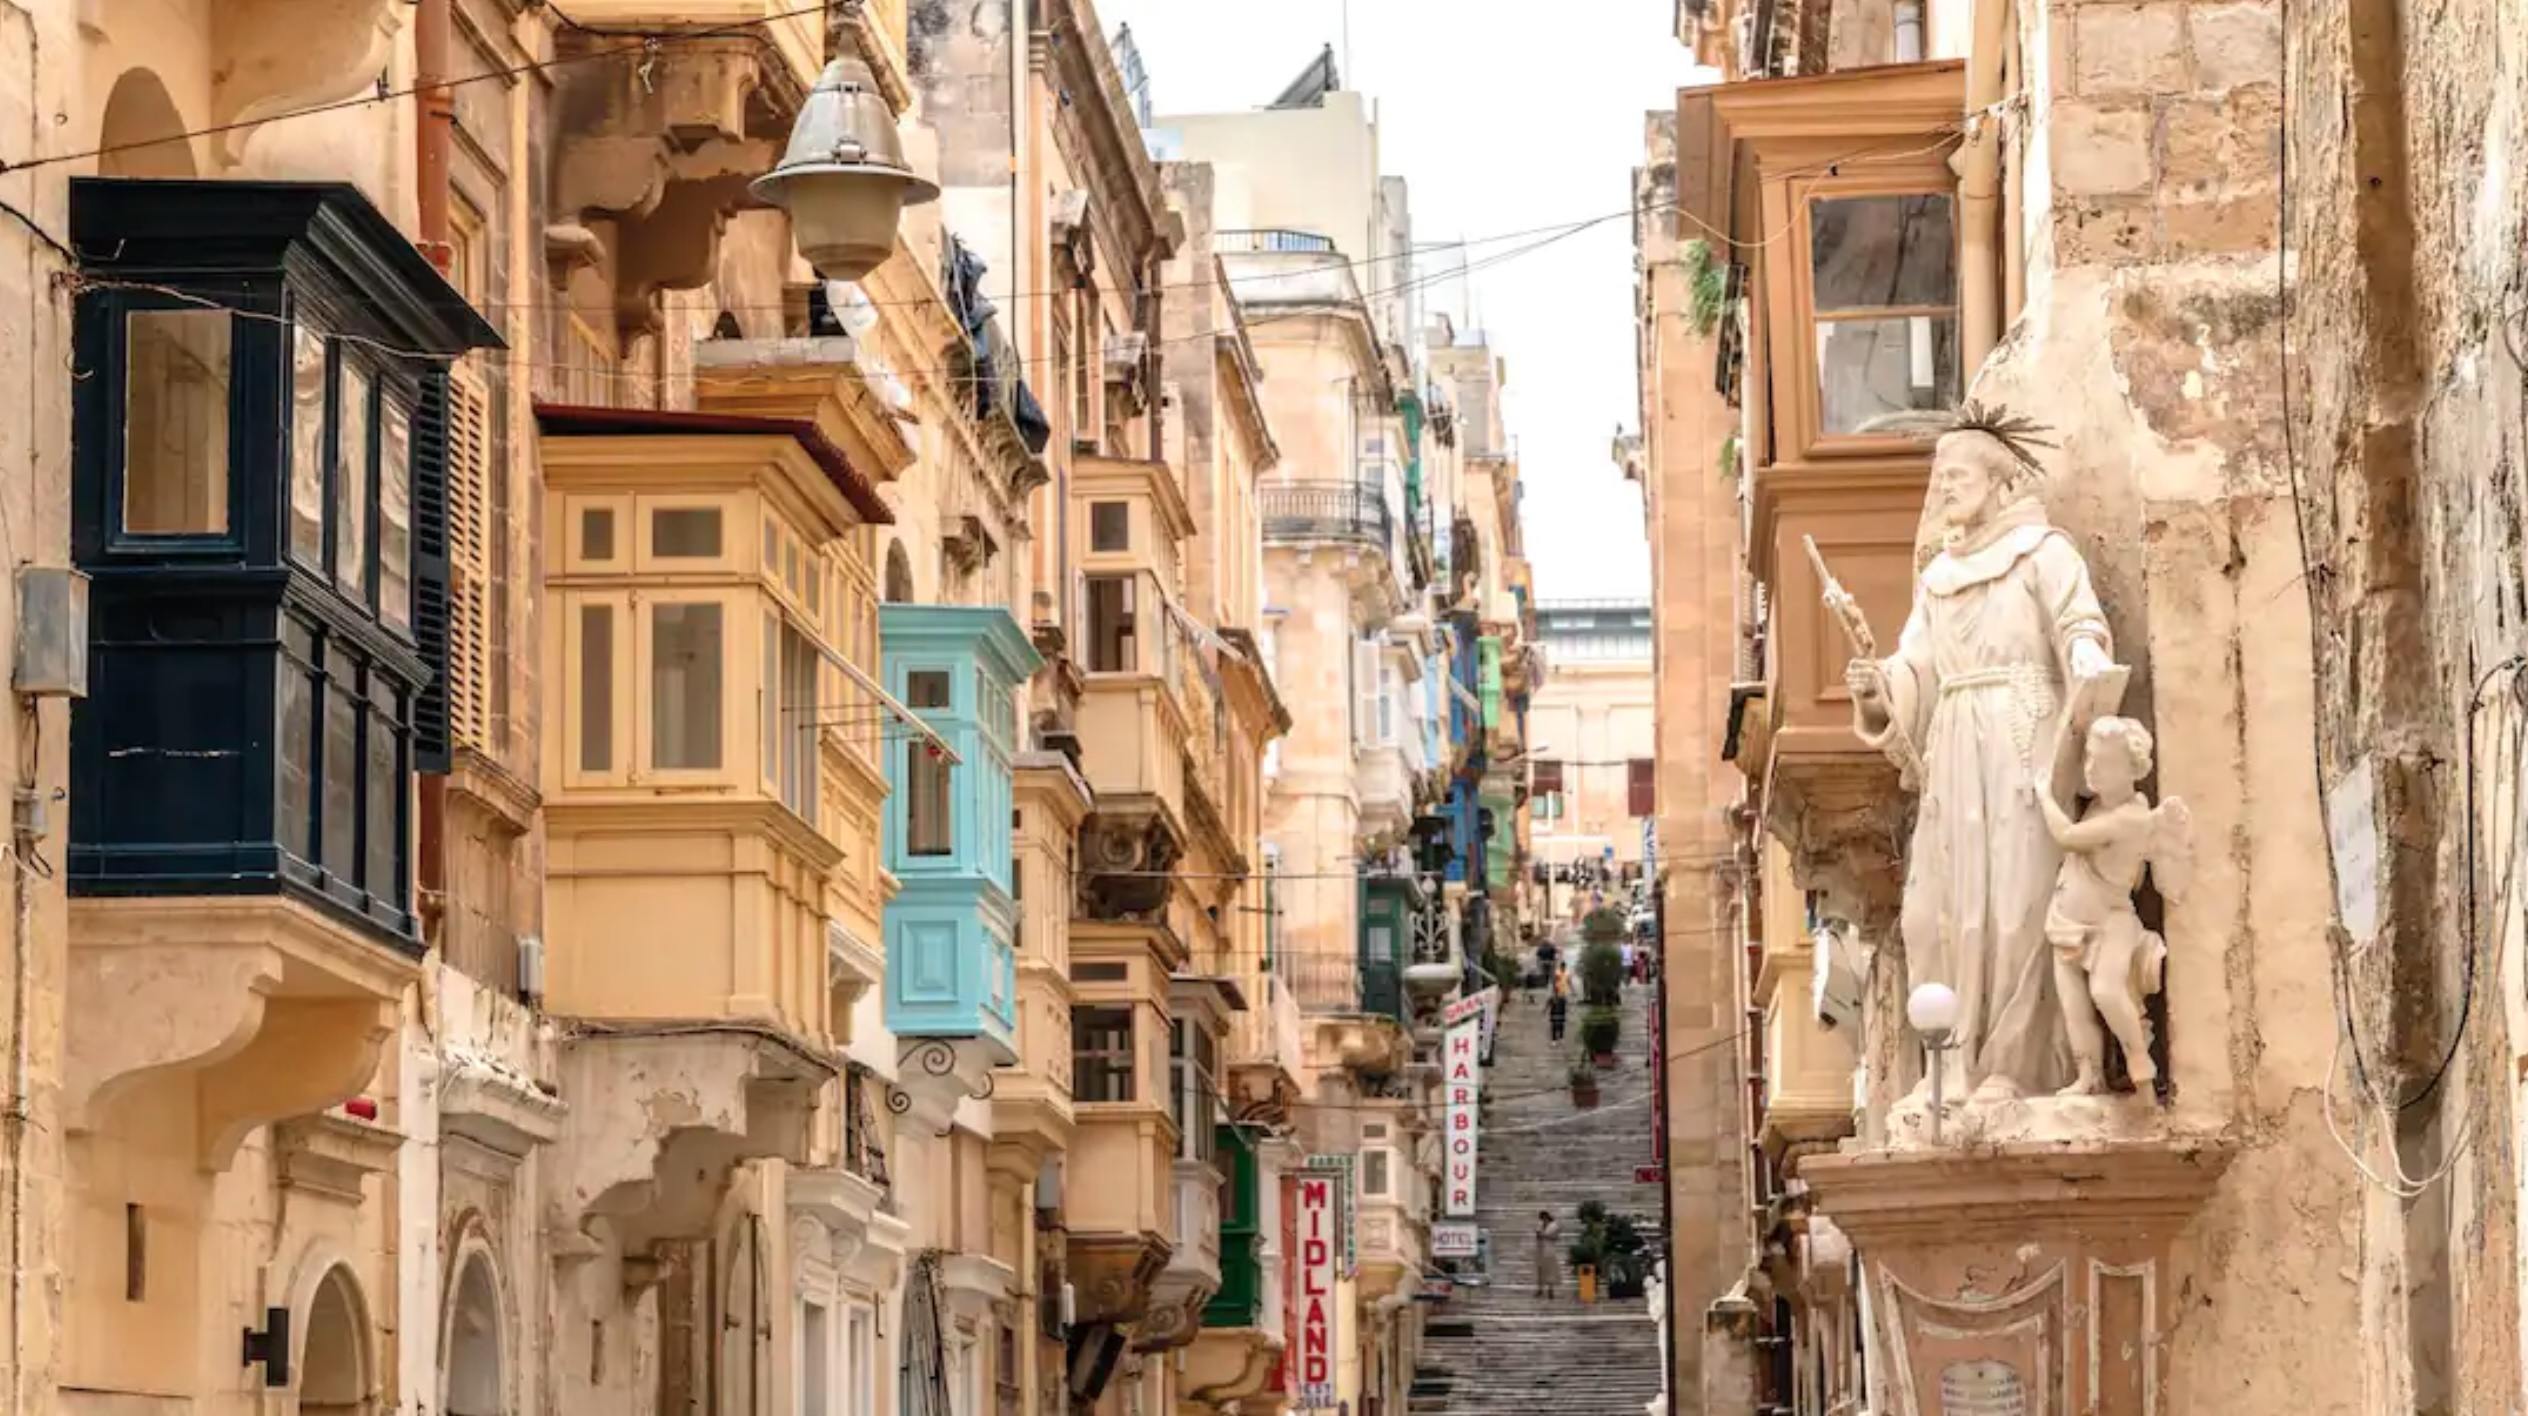 Steps in the city of Valletta, Malta